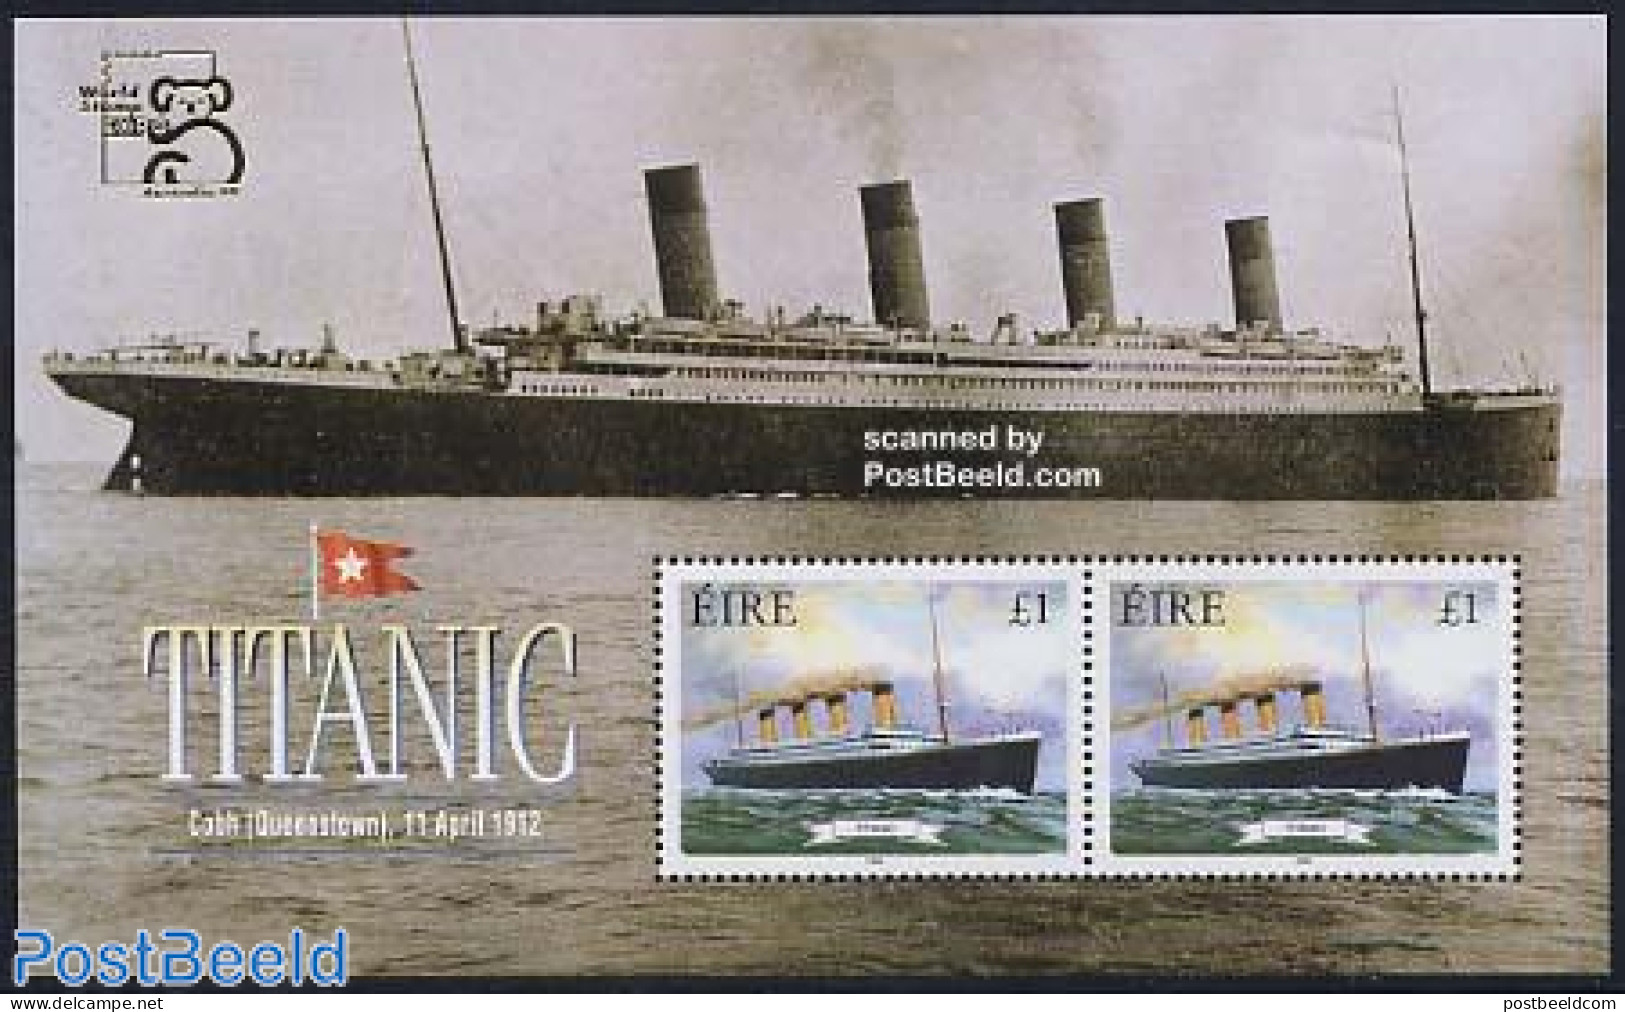 Ireland 1999 Australia 99 S/s, Mint NH, Transport - Philately - Ships And Boats - Titanic - Neufs